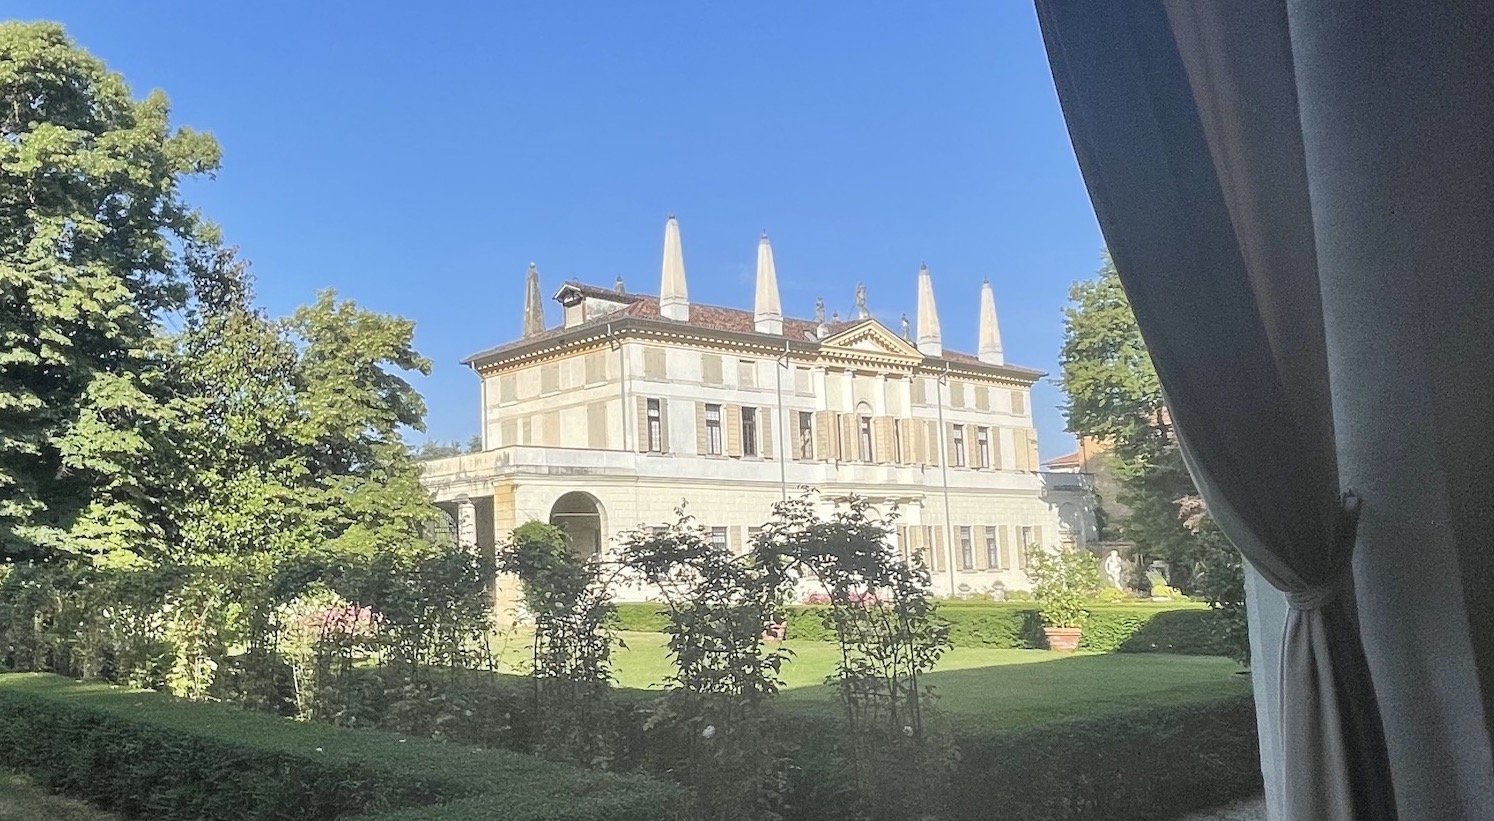 Villa Foscarini Rossi